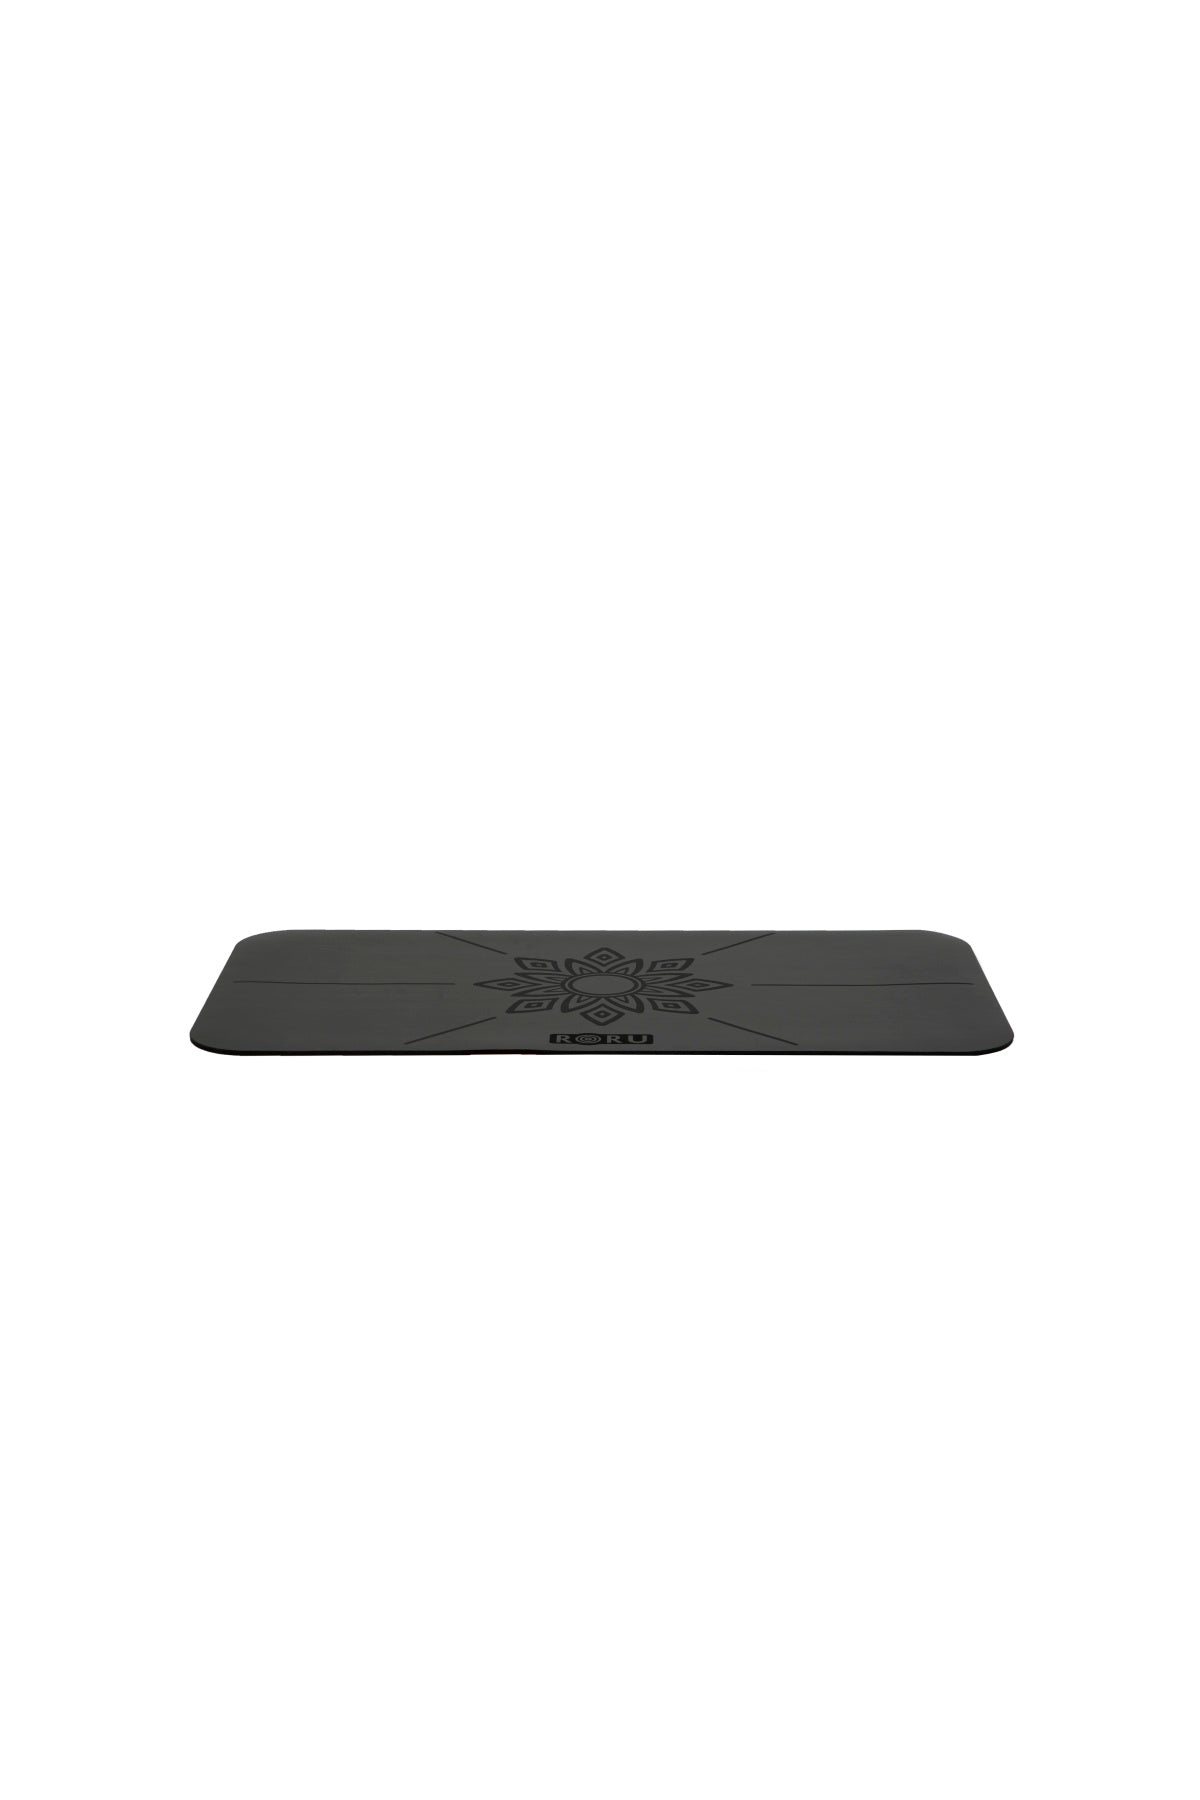 Roru Concept Sun Kaydırmaz Küçük Yoga Padi (Küçük Mat) 64 x 33 cm, Kuru - Nemli Ellere, Doğal Kauçuk, Siyah